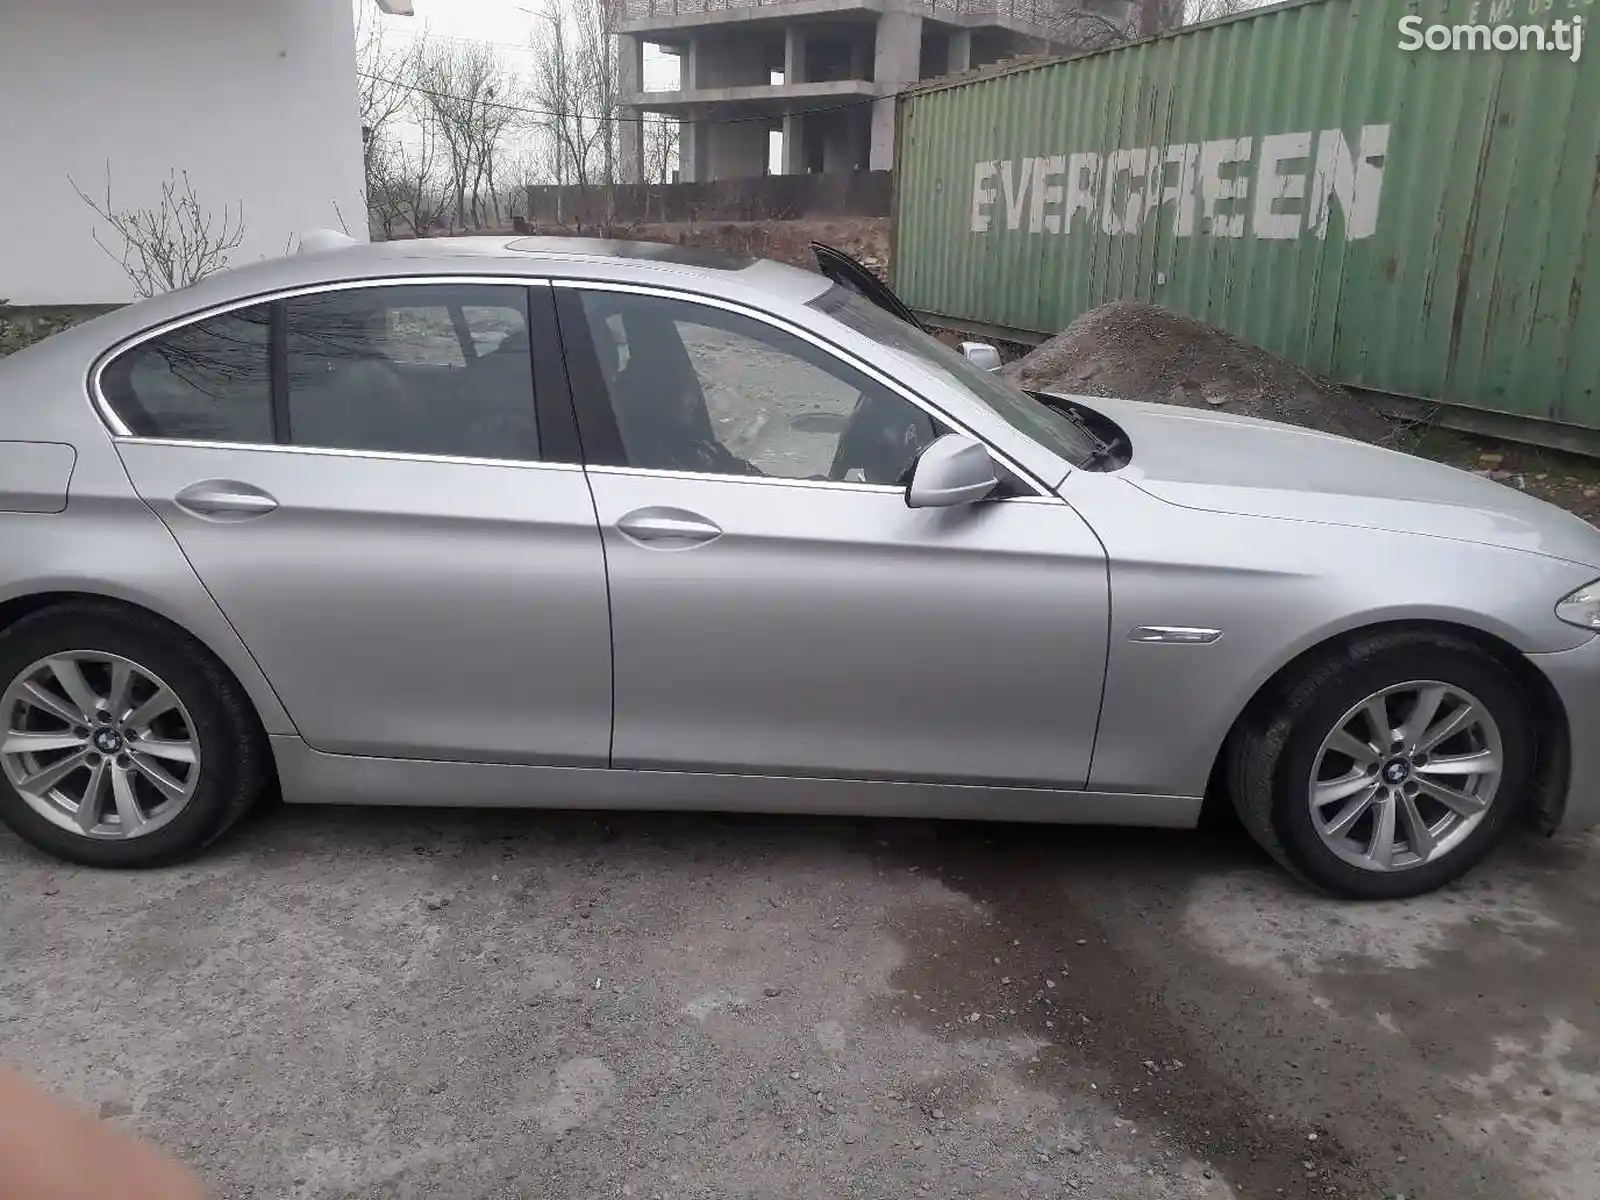 BMW 5 series, 2012-2